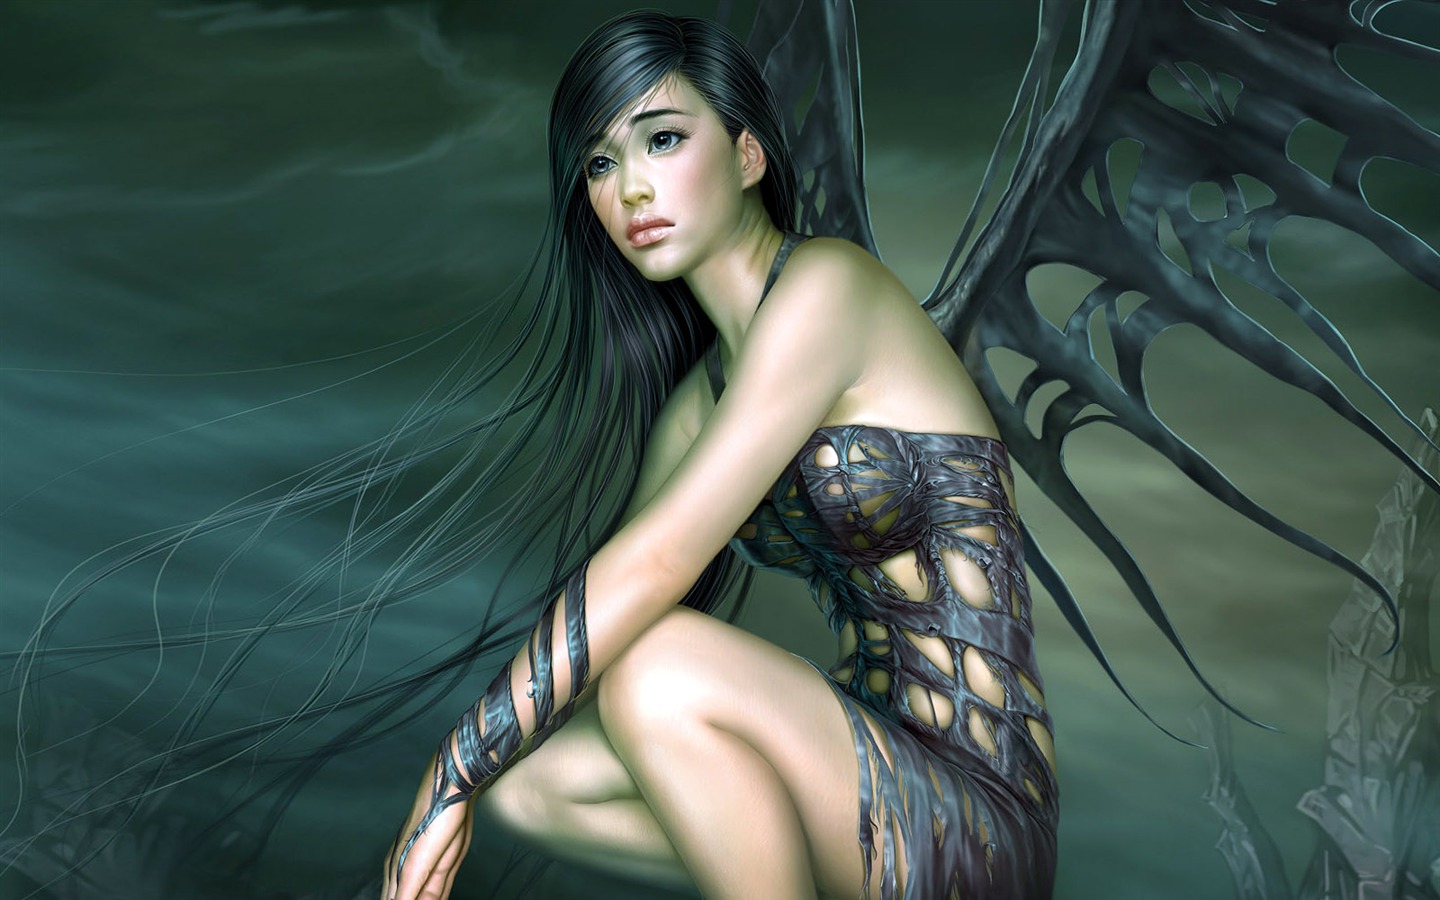 Belles femmes illustrateur fantasy fond d'écran #12 - 1440x900